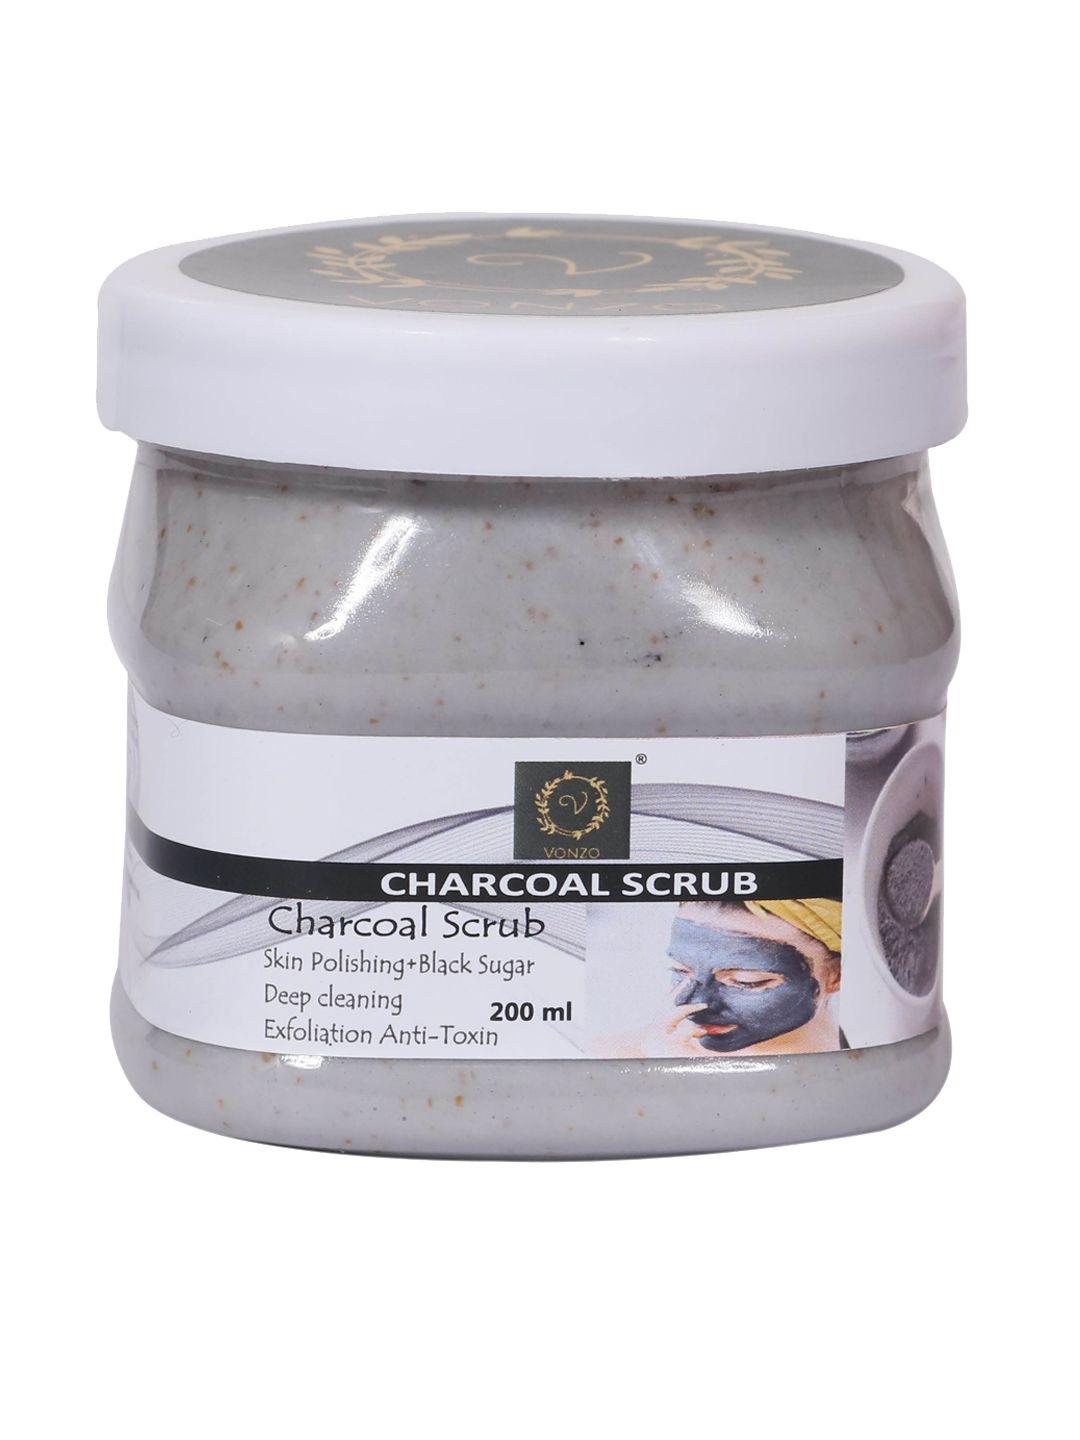 vonzo charcoal face & body scrub for skin polishing - 200 ml